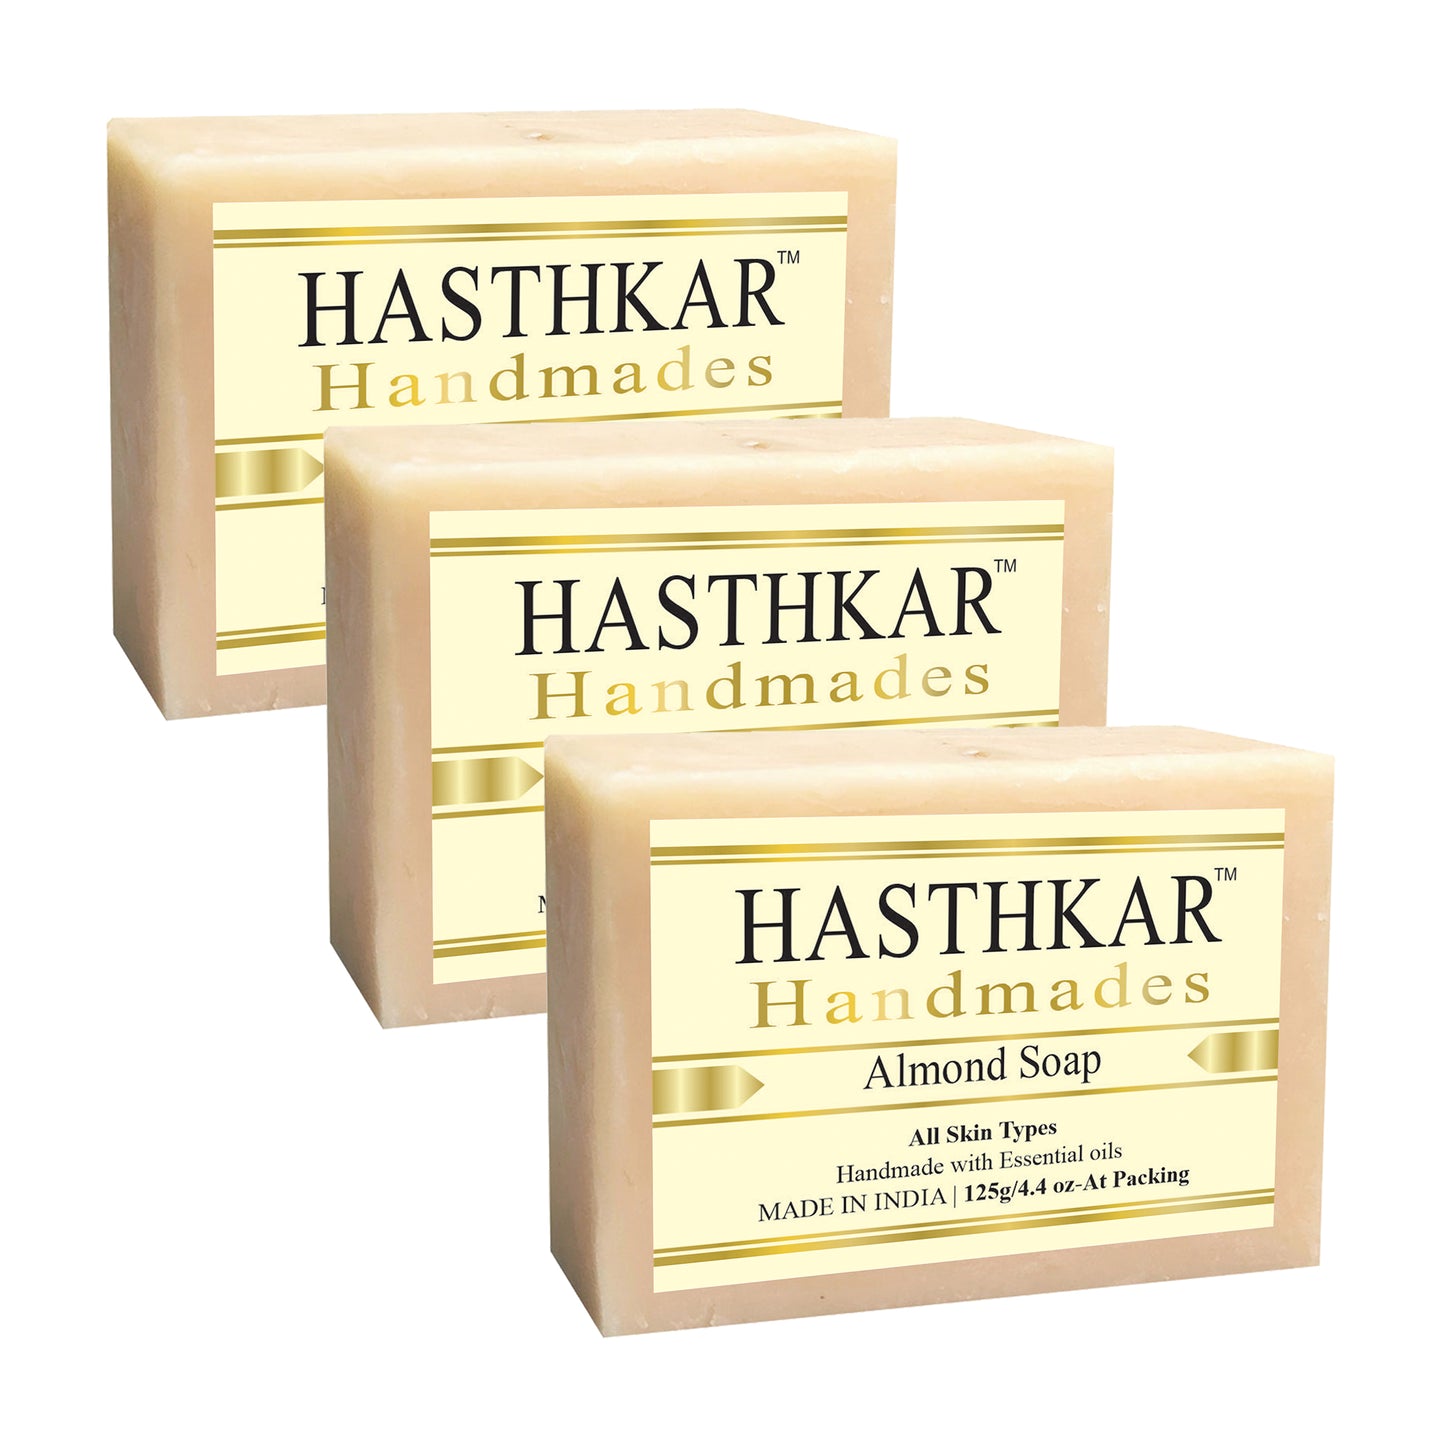 Hasthkar handmades Almond bathing soap men and women pack of 3